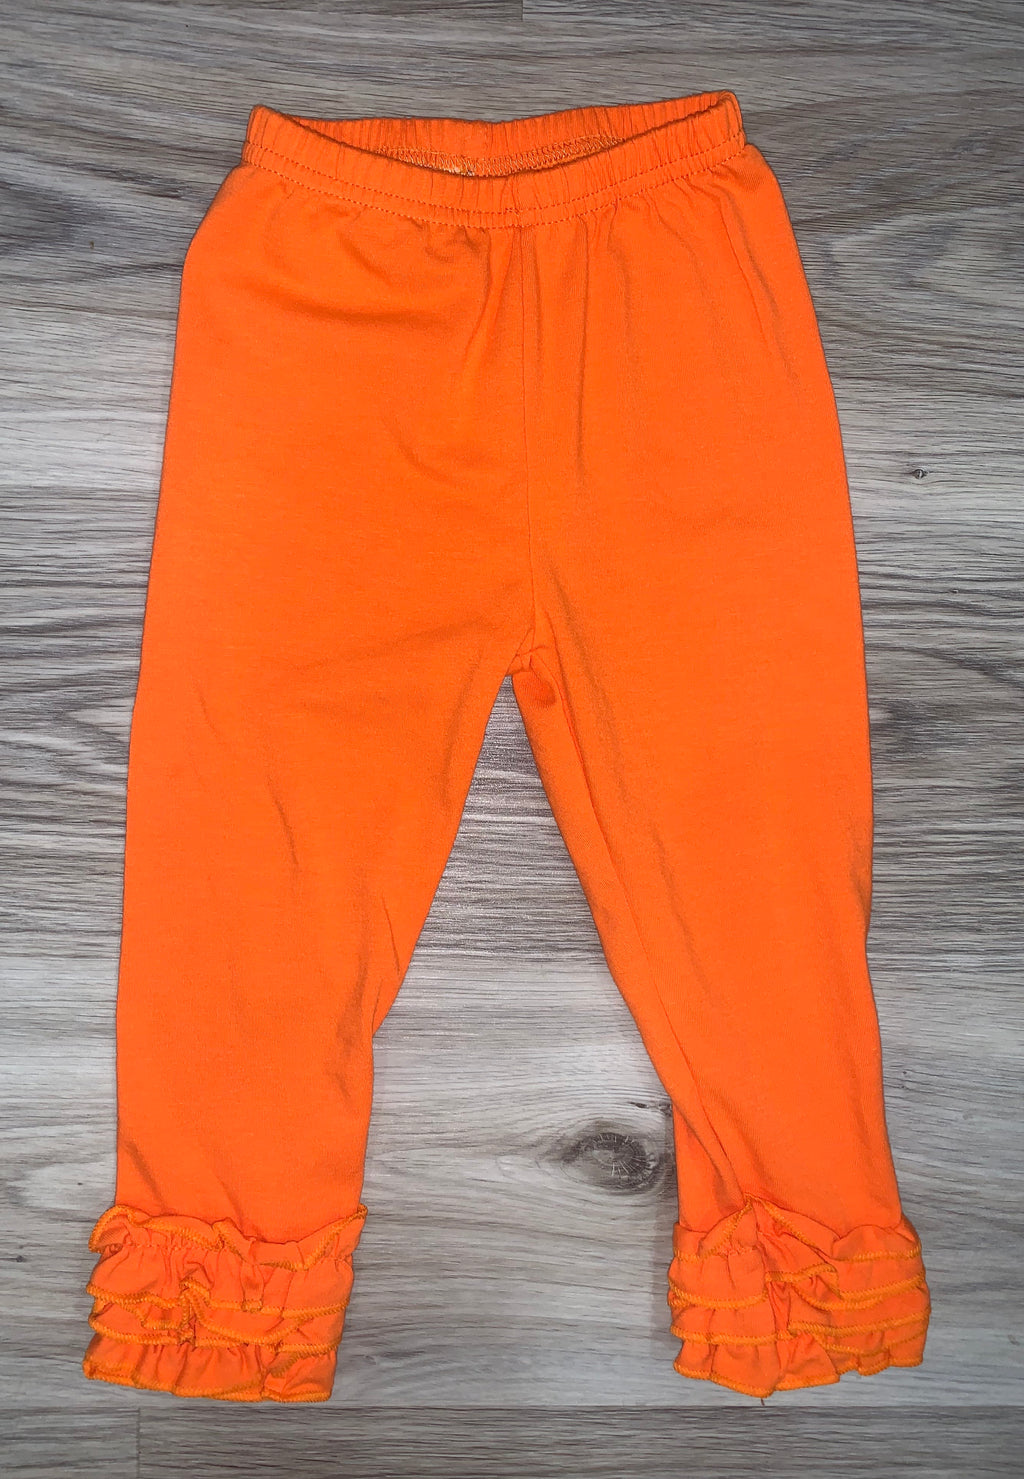 Icing Pants (Orange)